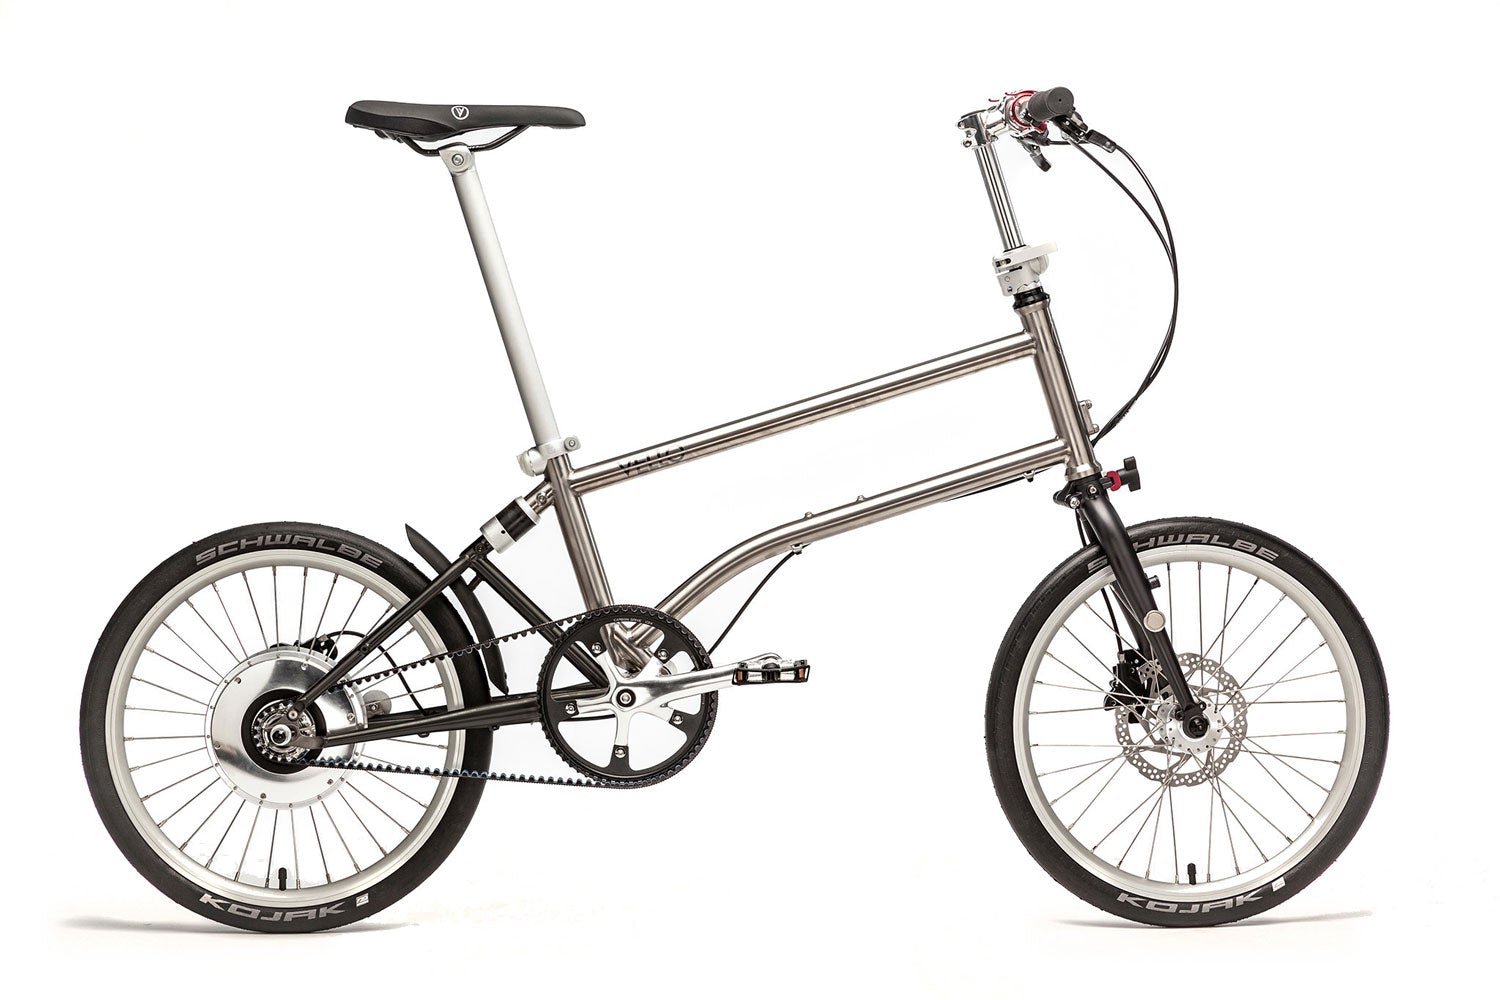 VELLO Bike+ AUTOMATIC Foldable Electric Bike - Folding E-bike – VELLO BIKE